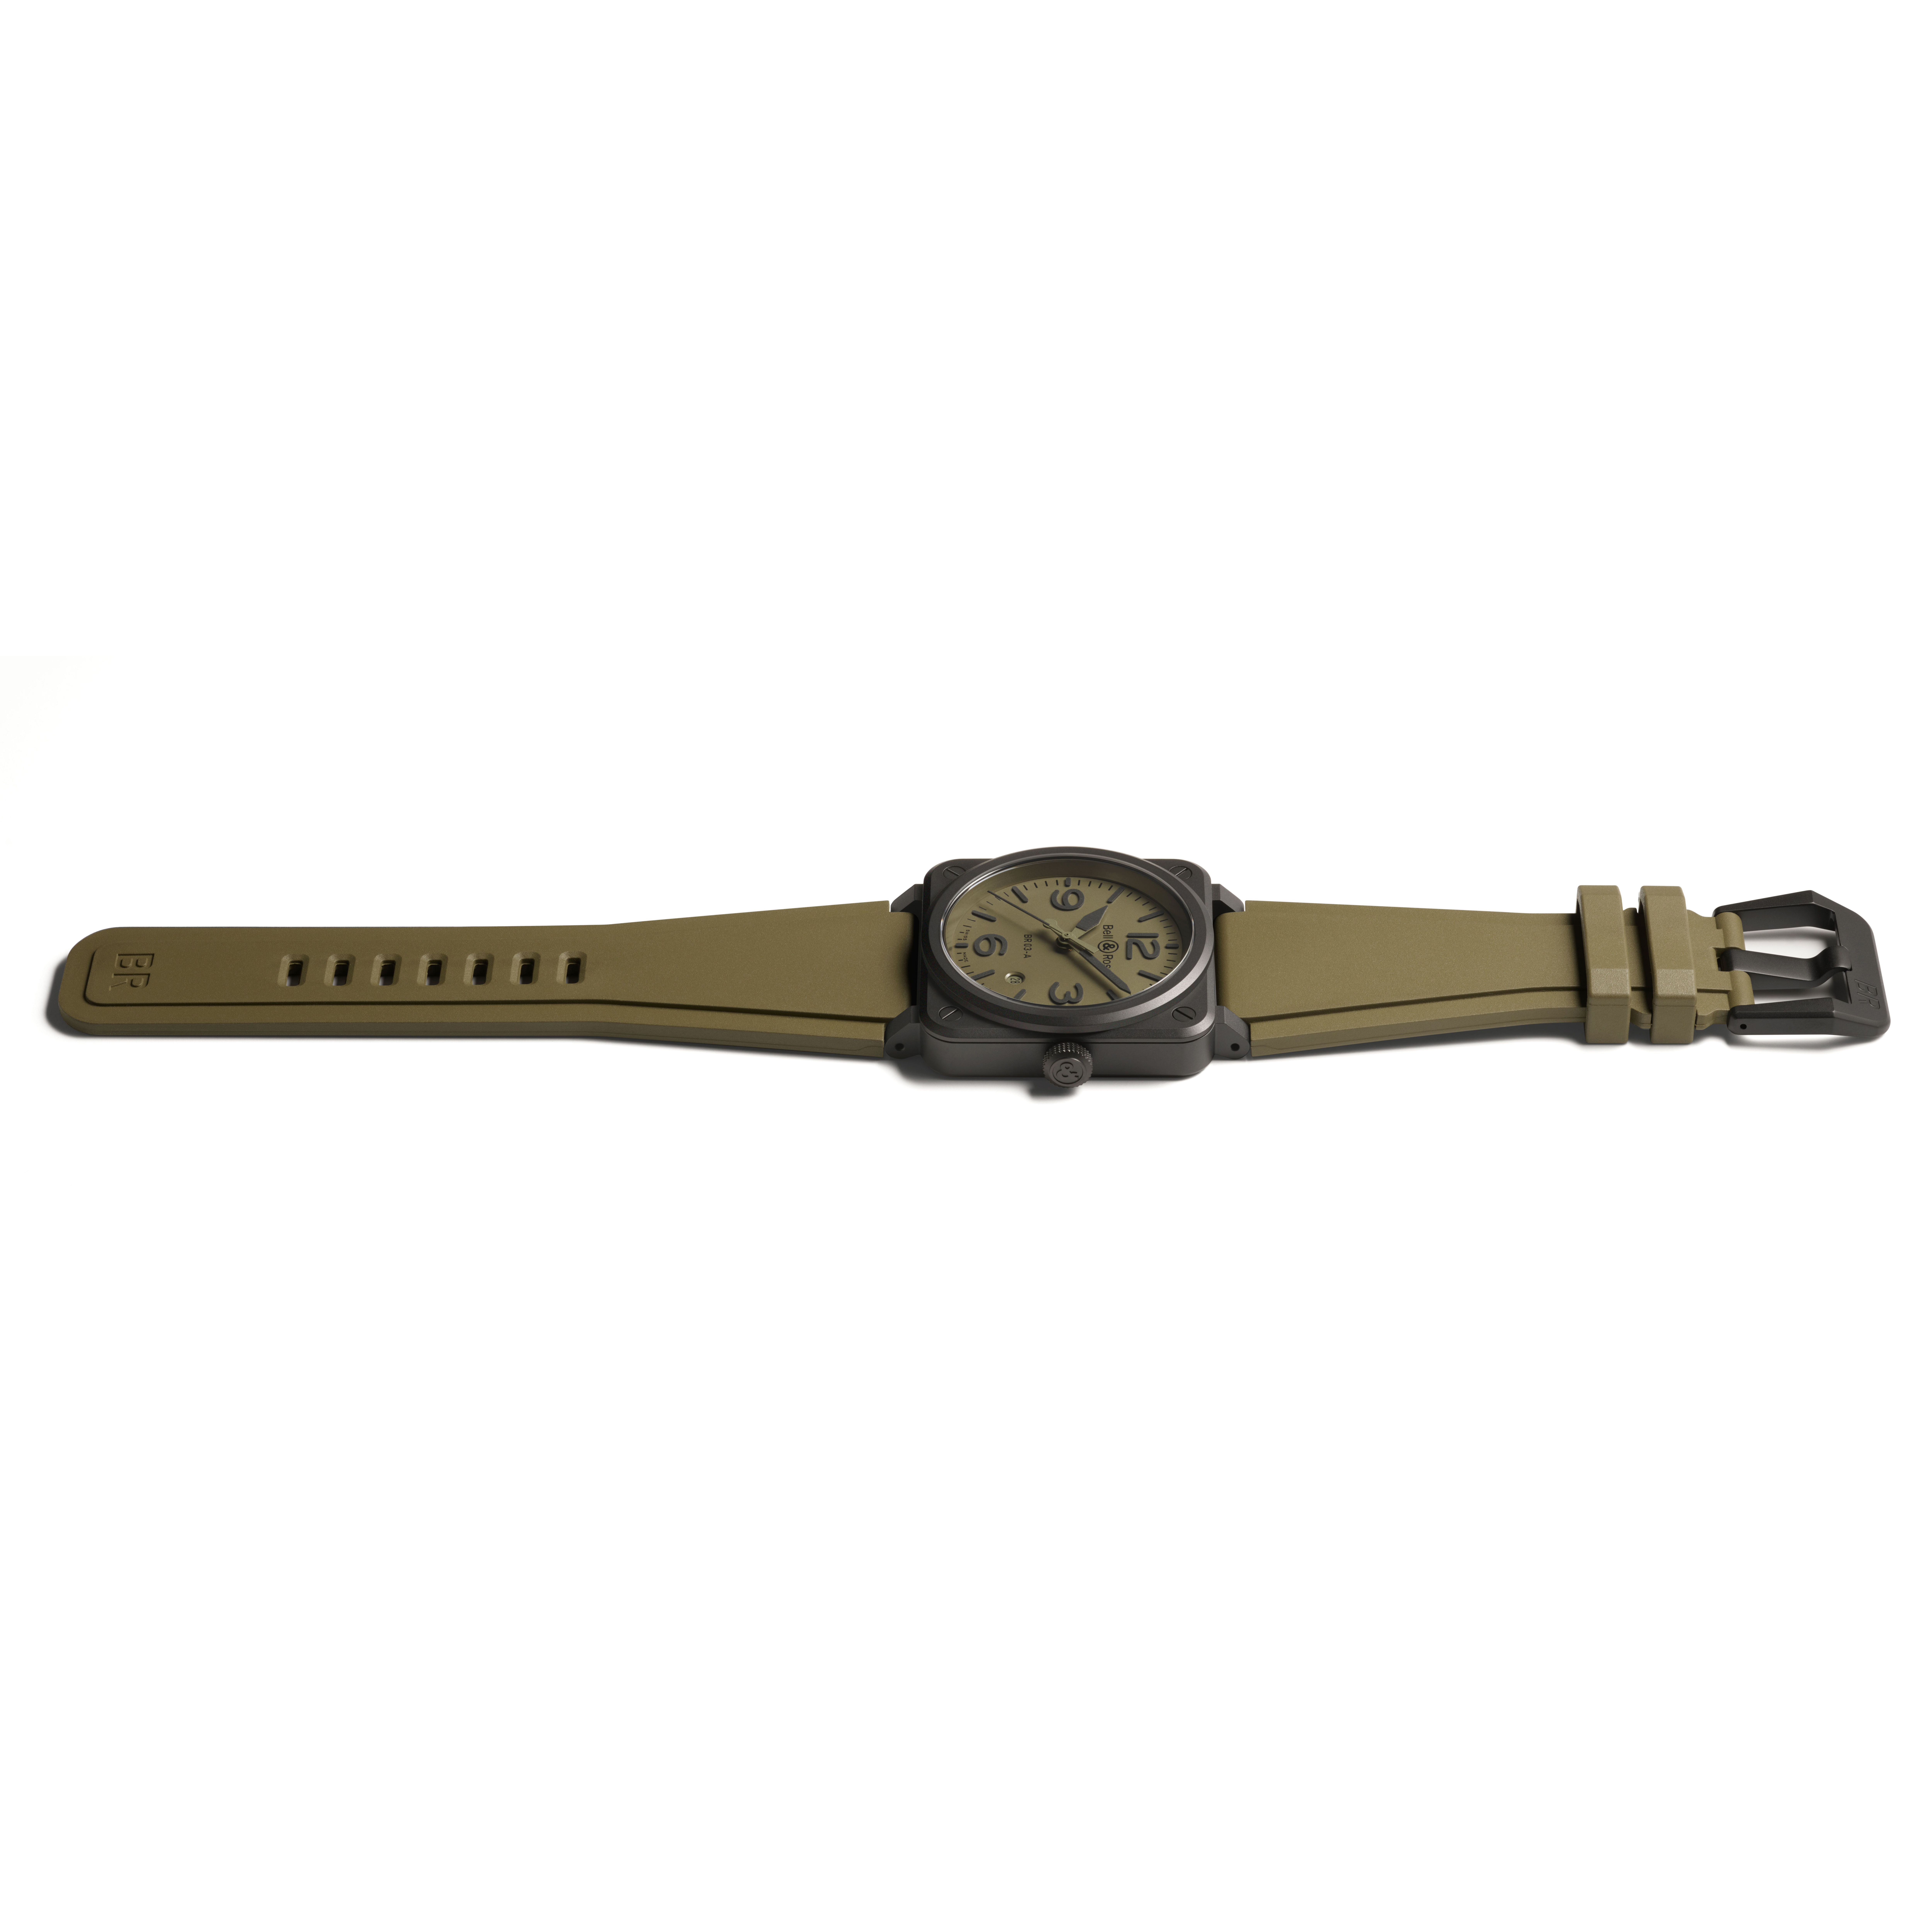 Bell & Ross BR 03 Military Khaki Green Rubber Strap Watch